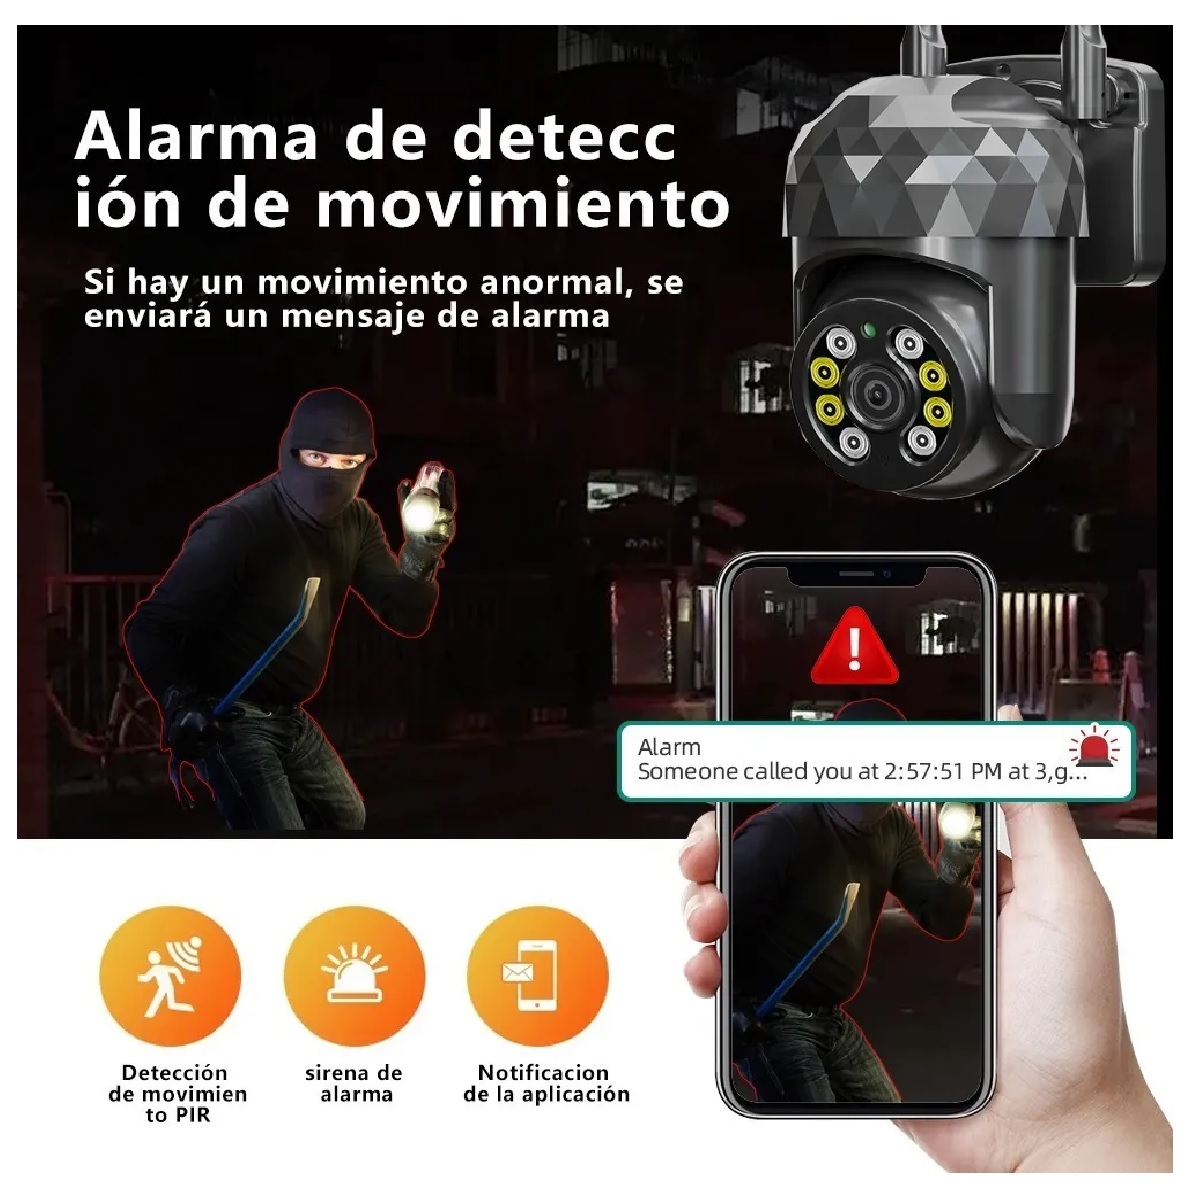 Cámara Seguridad Wifi 2mp Hd Videovigilancia Remota/alarma Negro